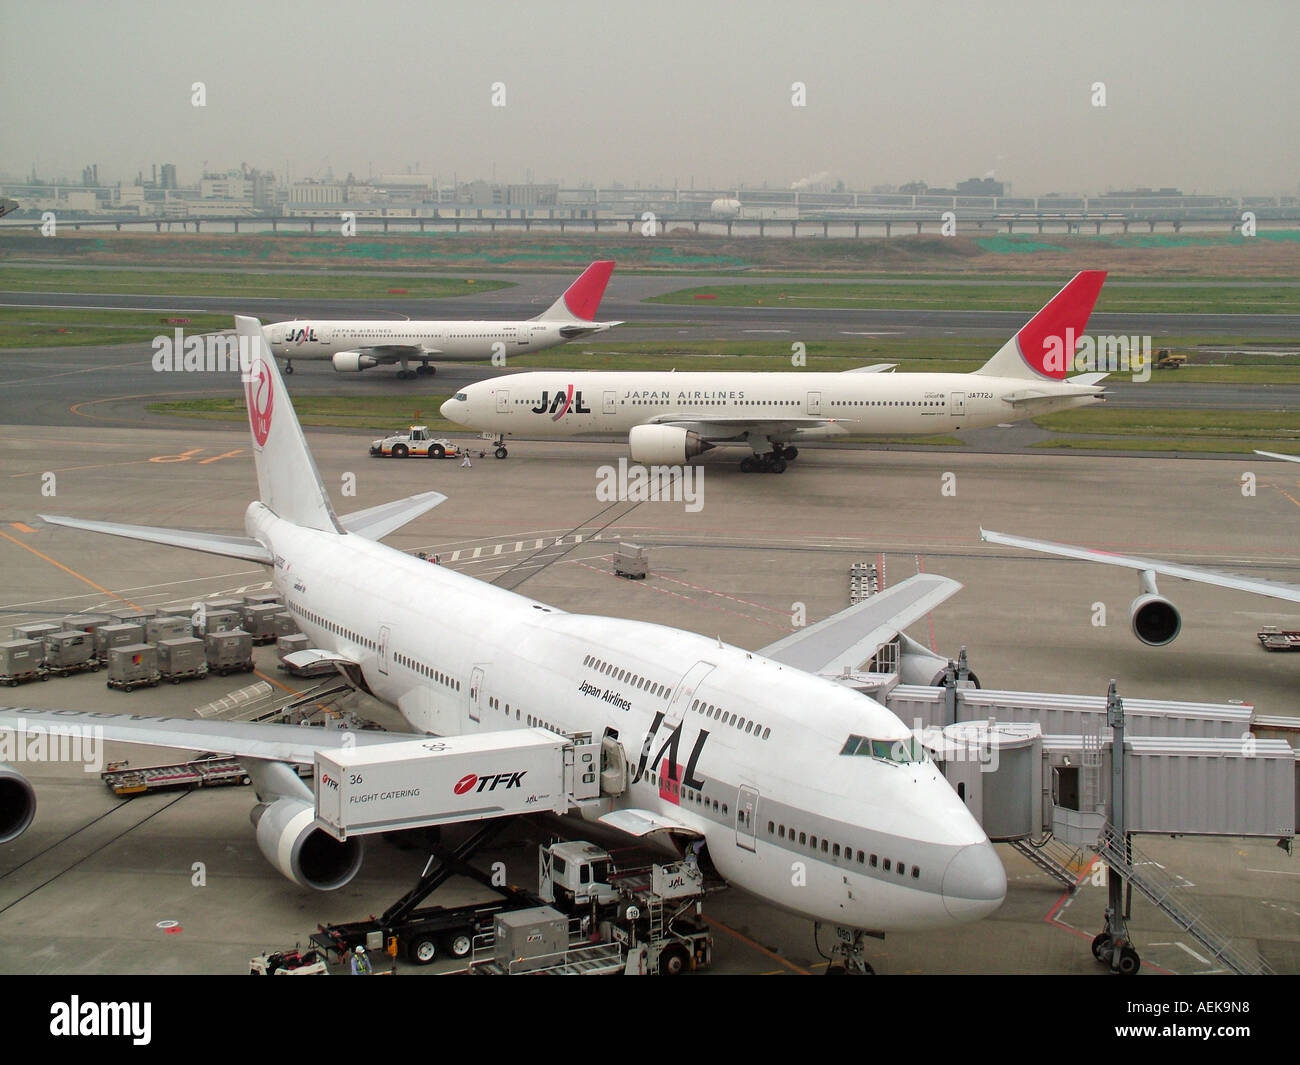 JAL aircraft at Norita Airport Tokyo Japan Asia. 747 jet in foreground Stock Photo